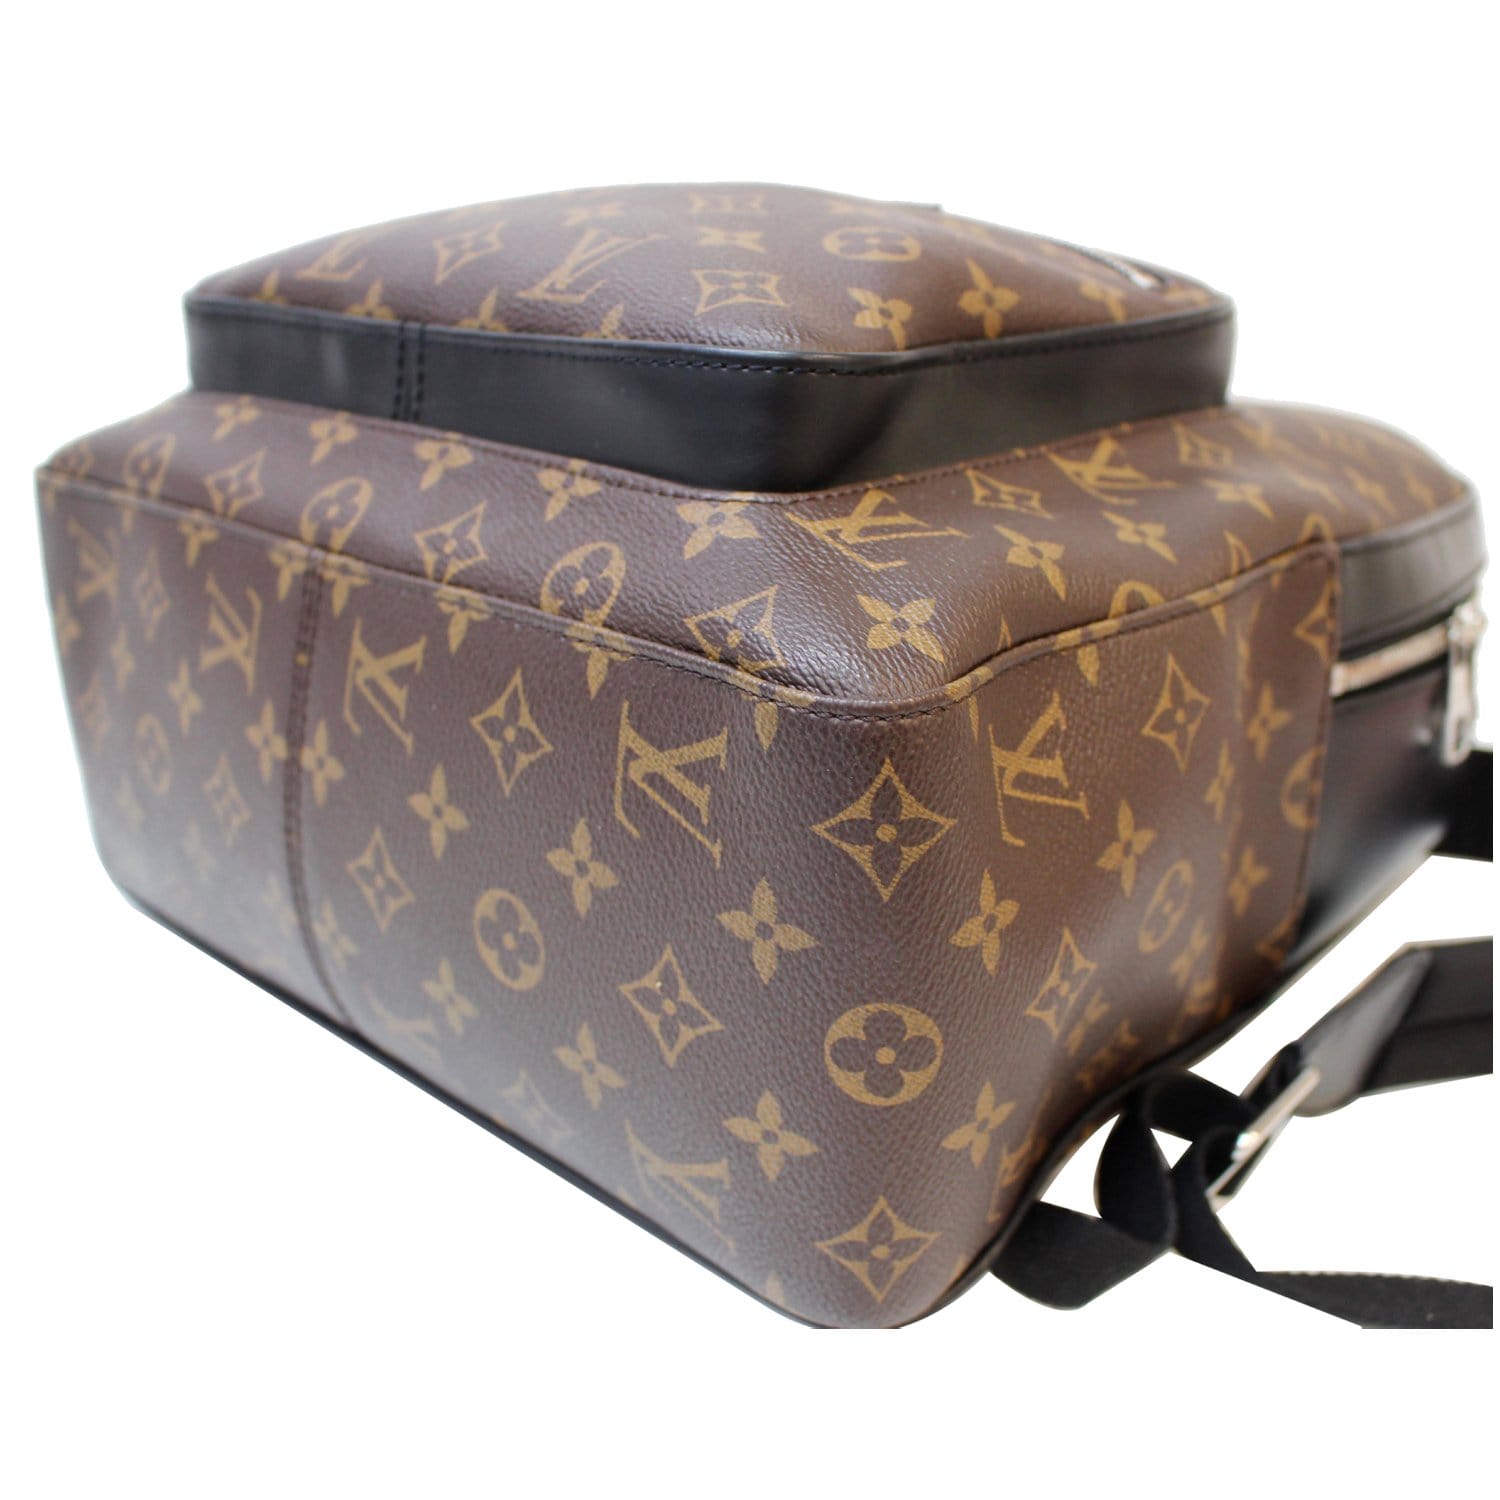 Josh backpack cloth bag Louis Vuitton Brown in Cloth - 37365213